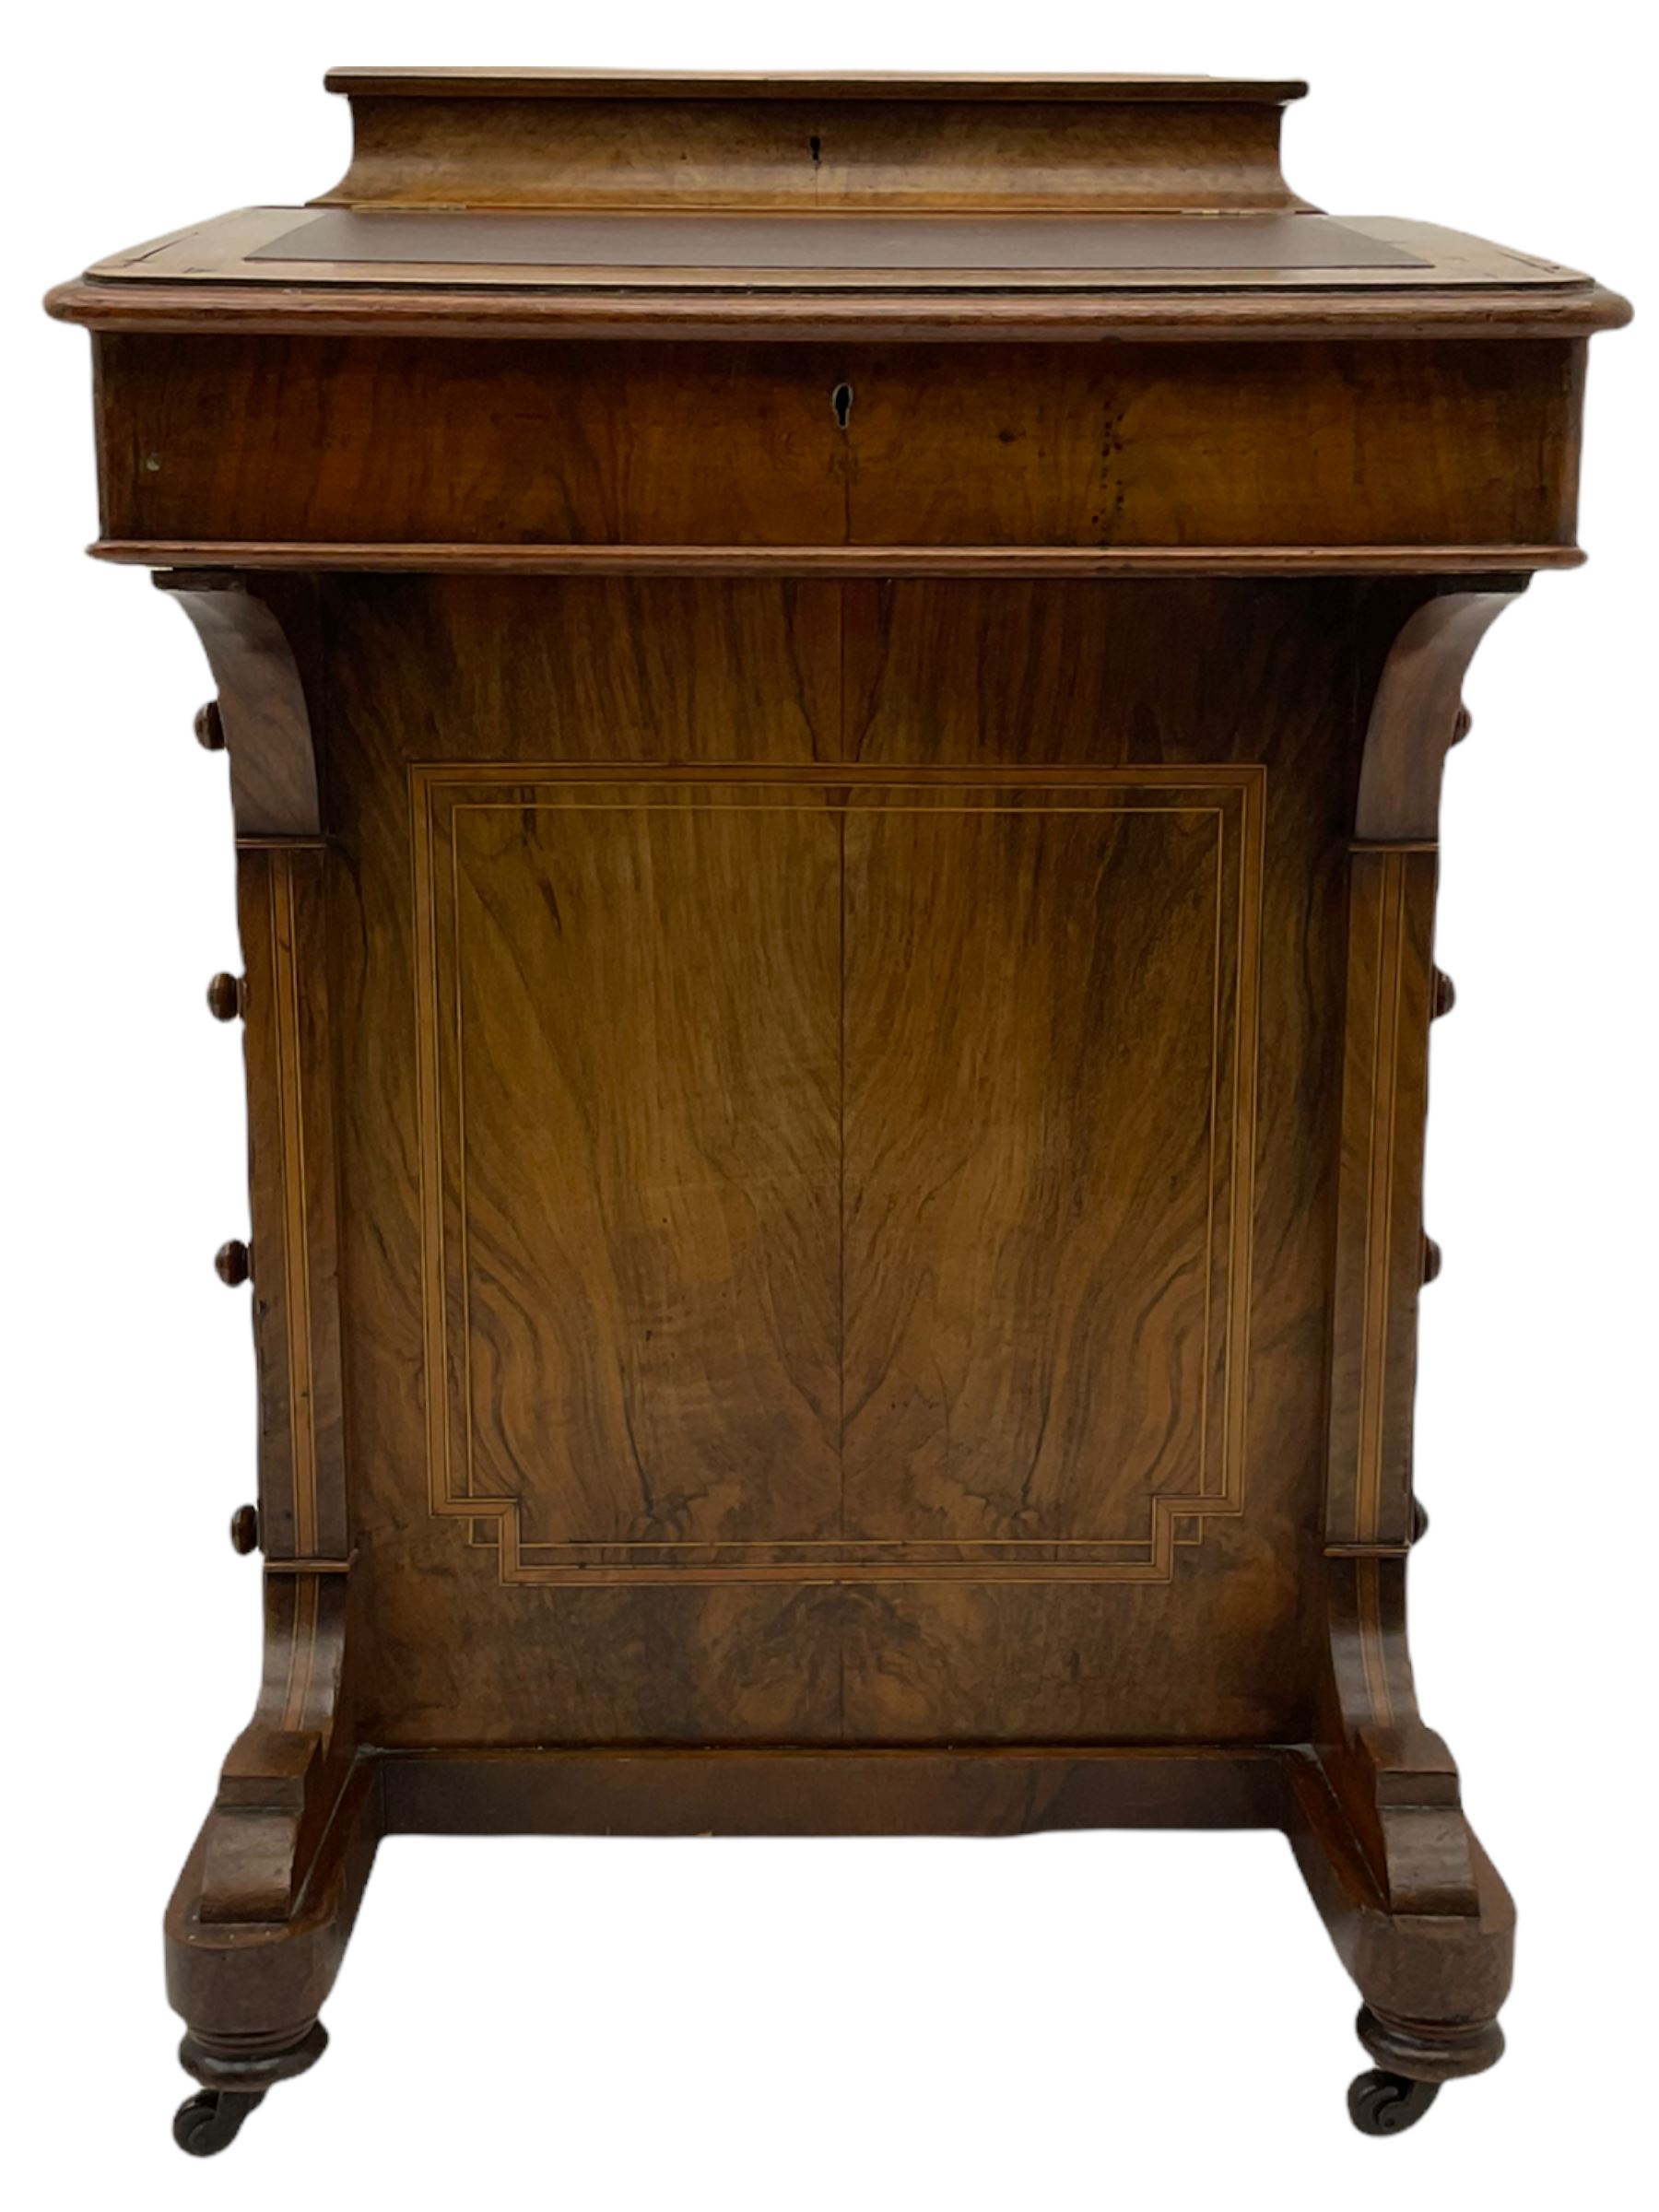 Victorian inlaid walnut Davenport desk - Image 2 of 7